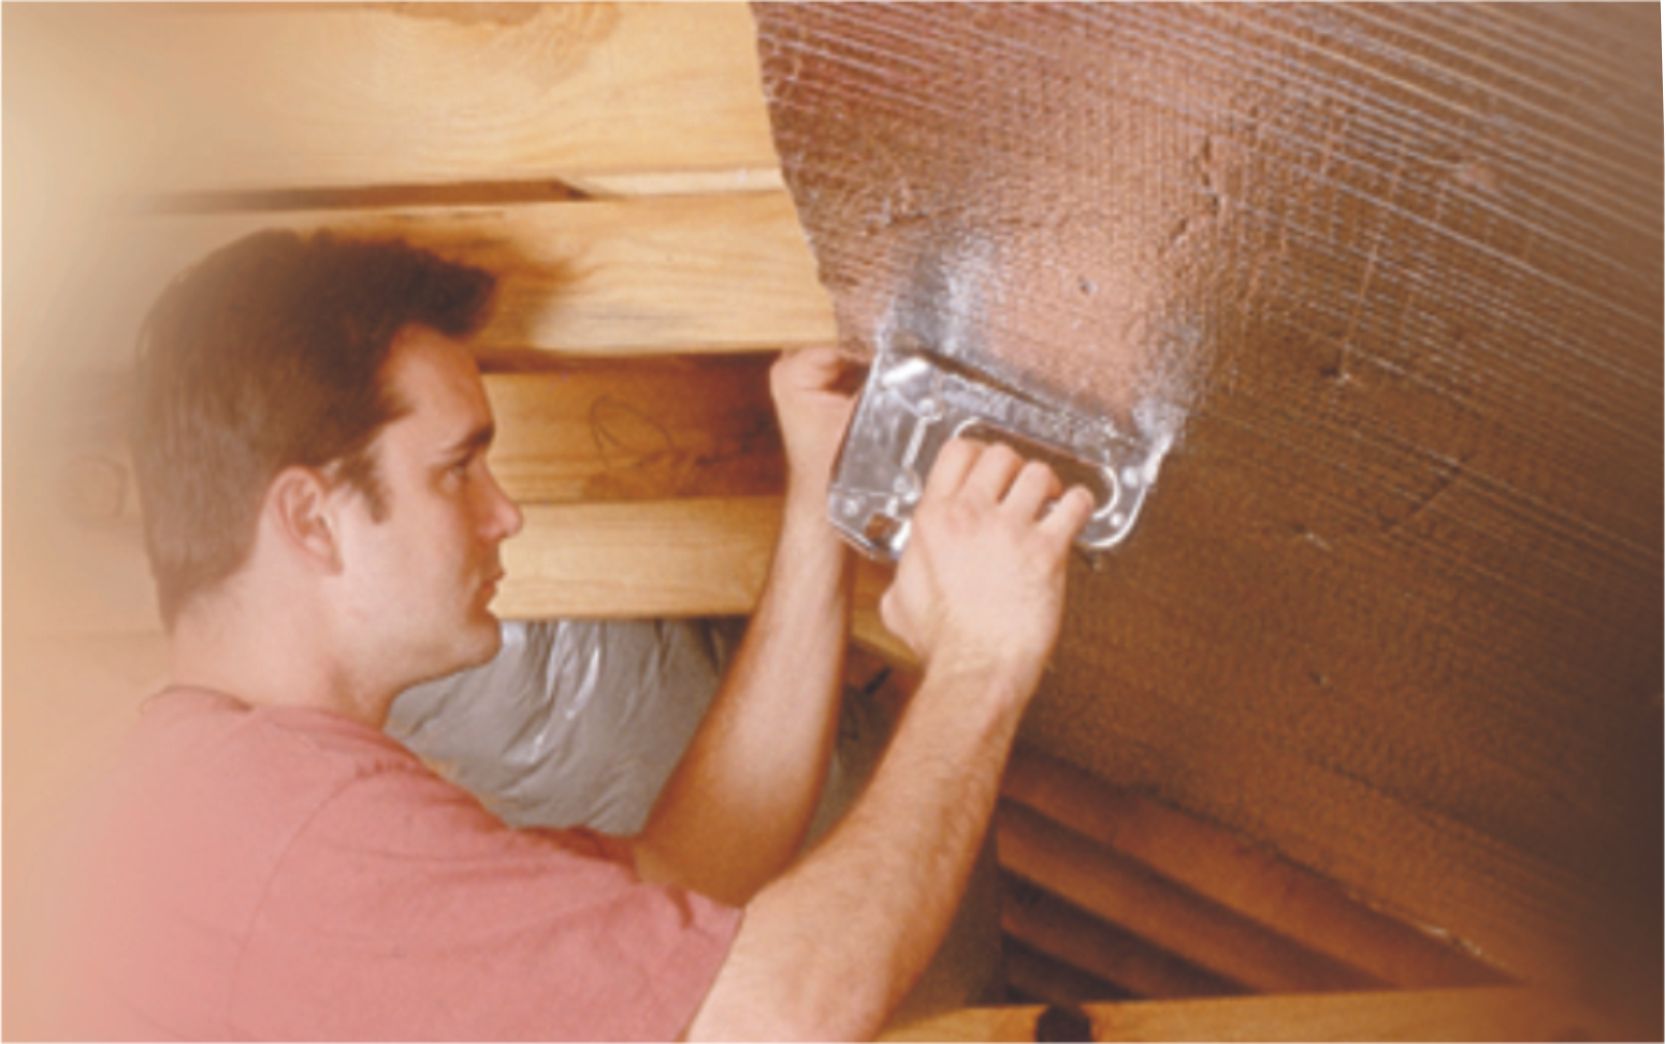 attic instulation of radiant barrier insulation